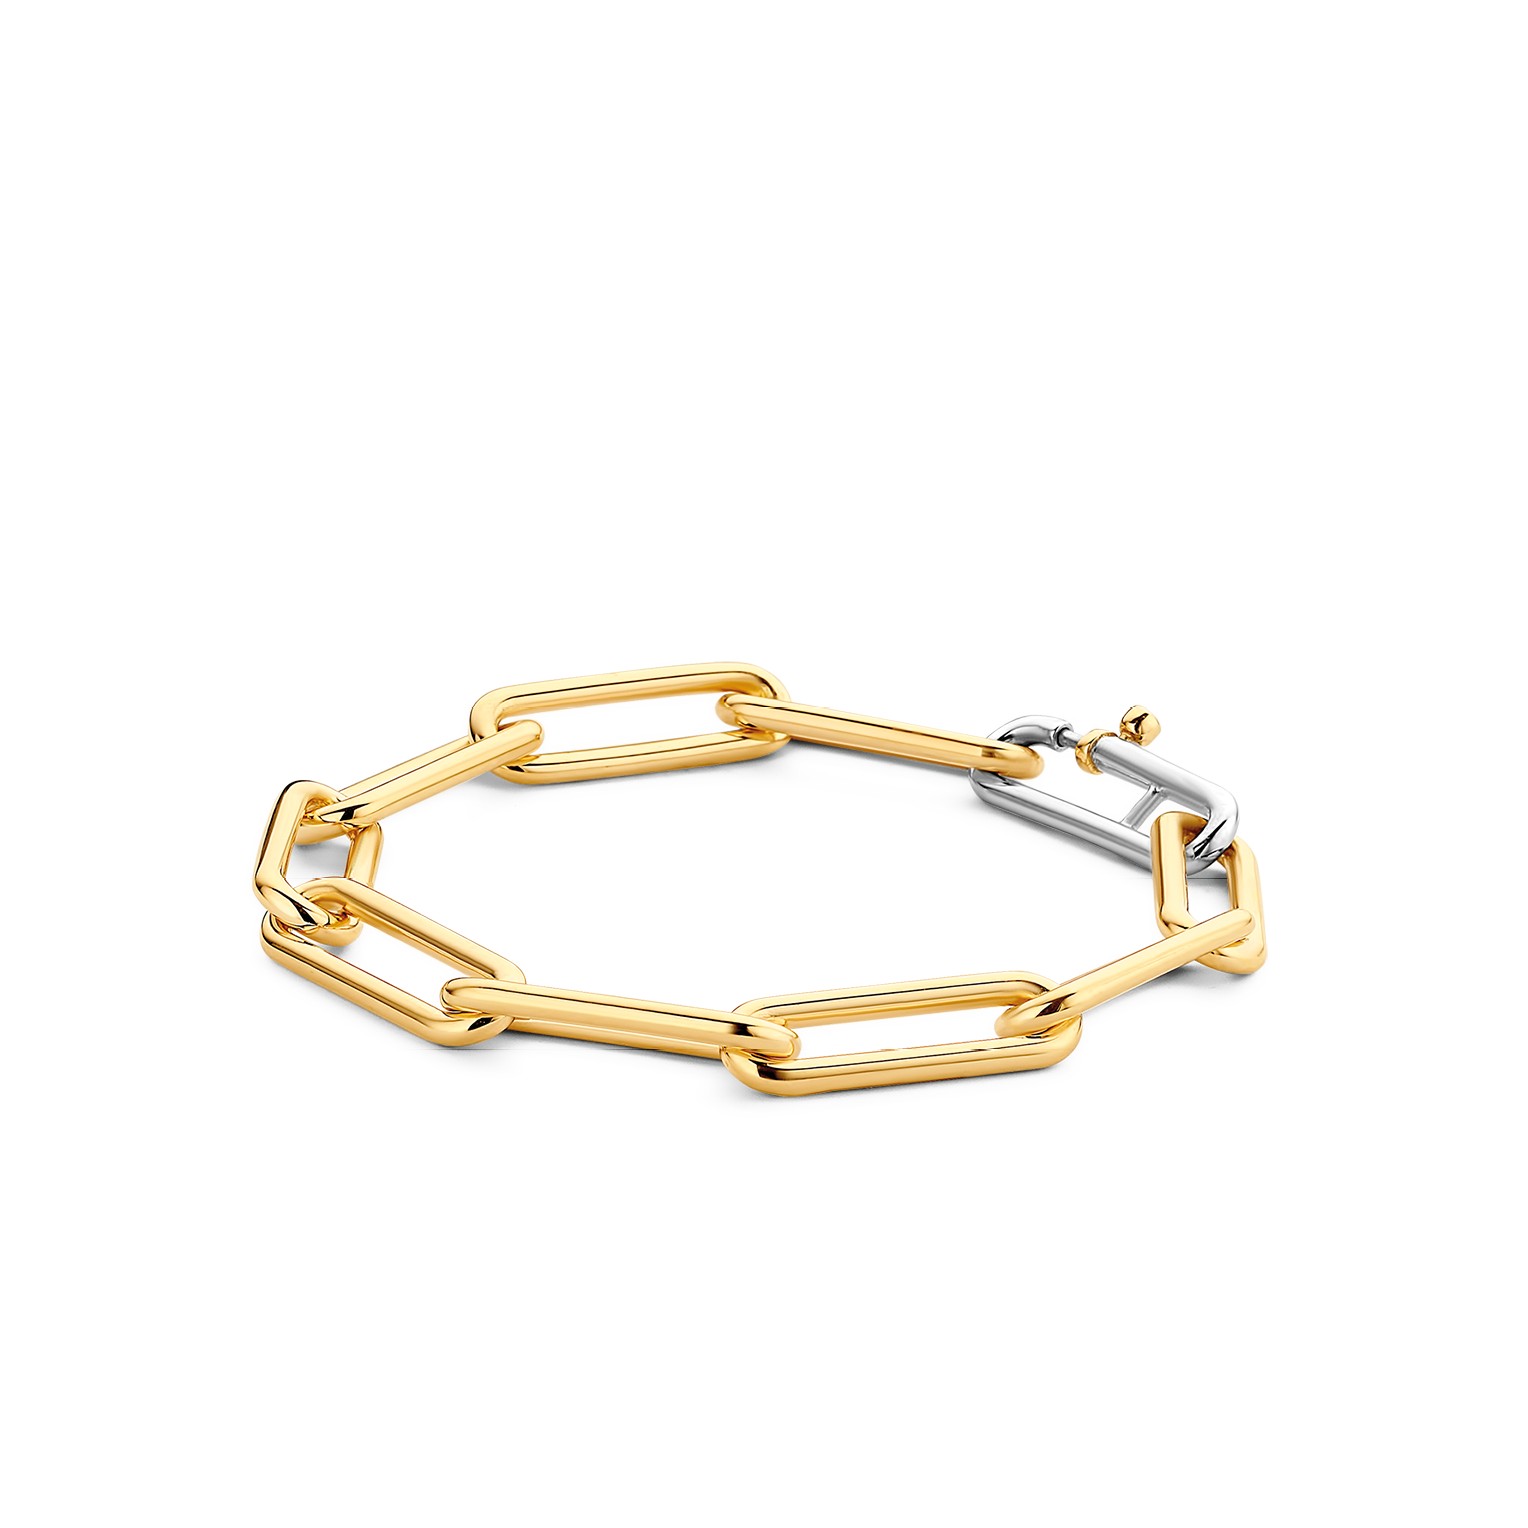 TI SENTO - Milano Bracelet 2926SY Gala Jewelers Inc. White Oak, PA